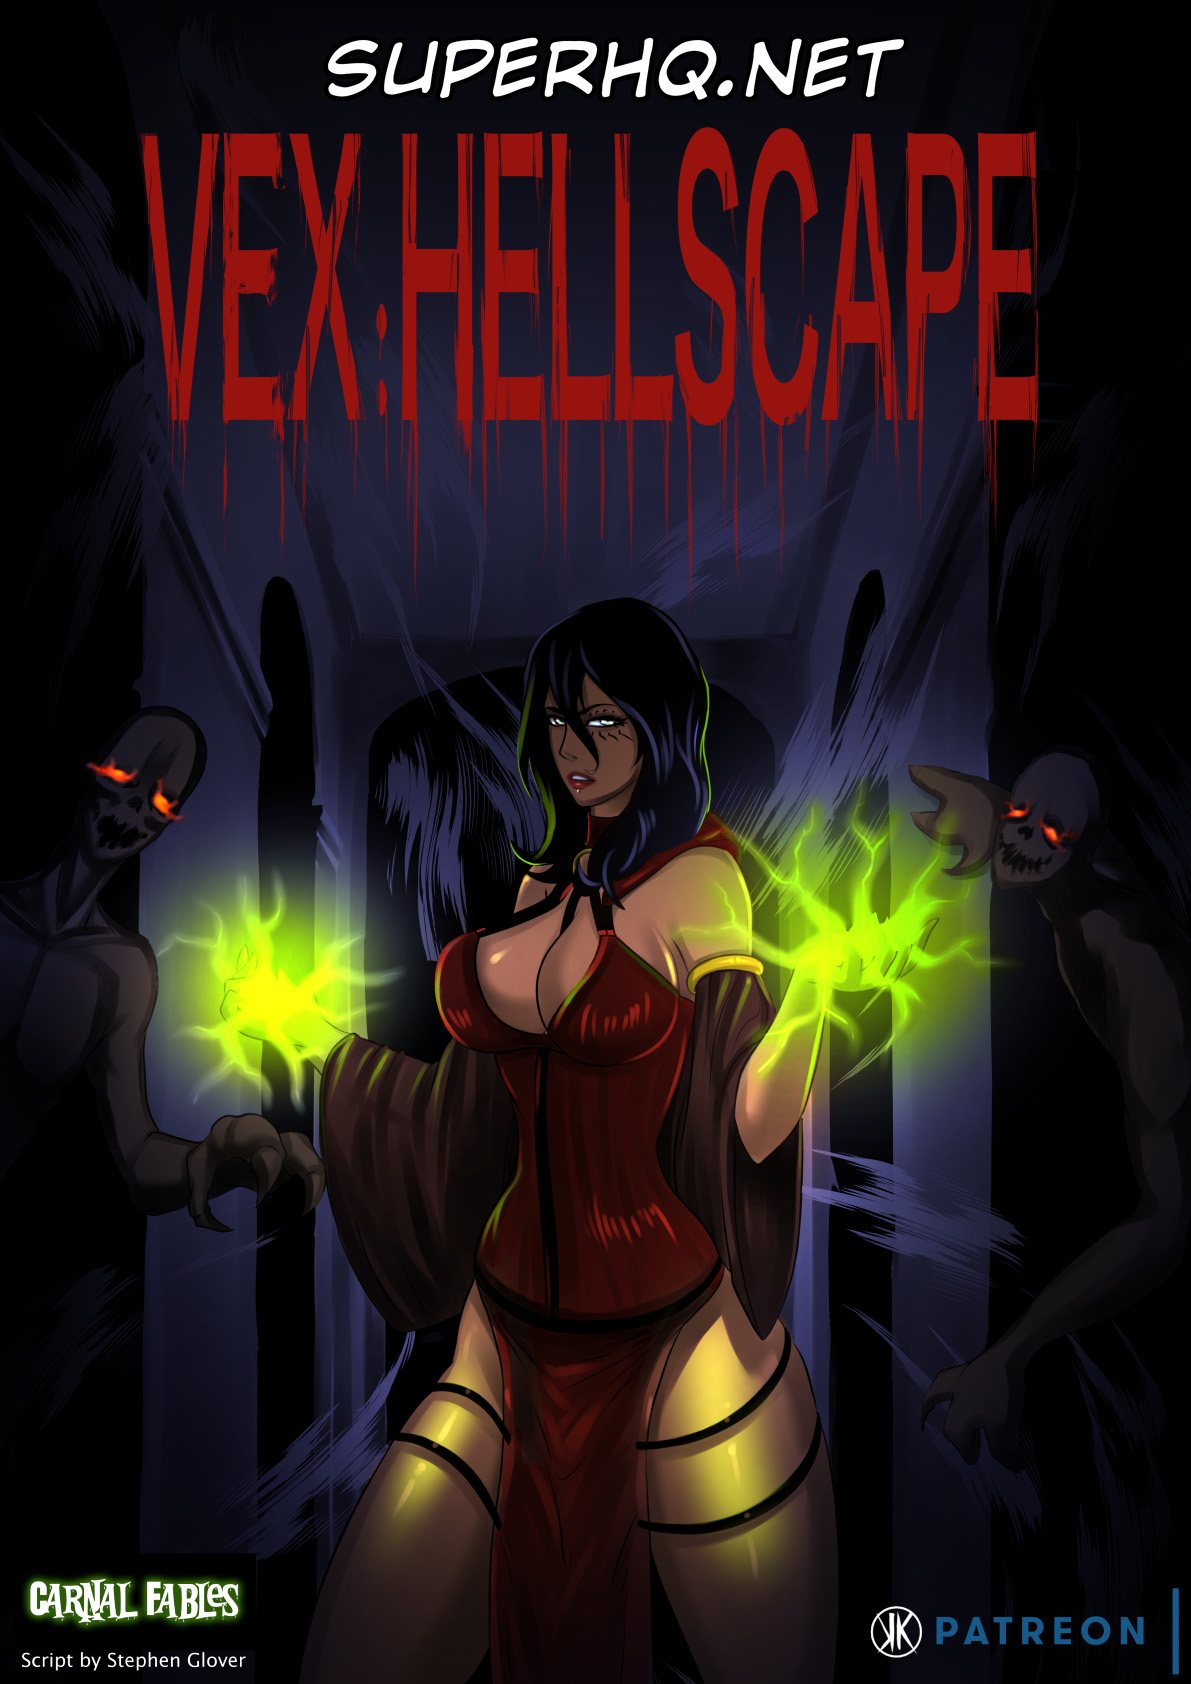 Vex Hellscape - A maravilhosa bruxa peituda